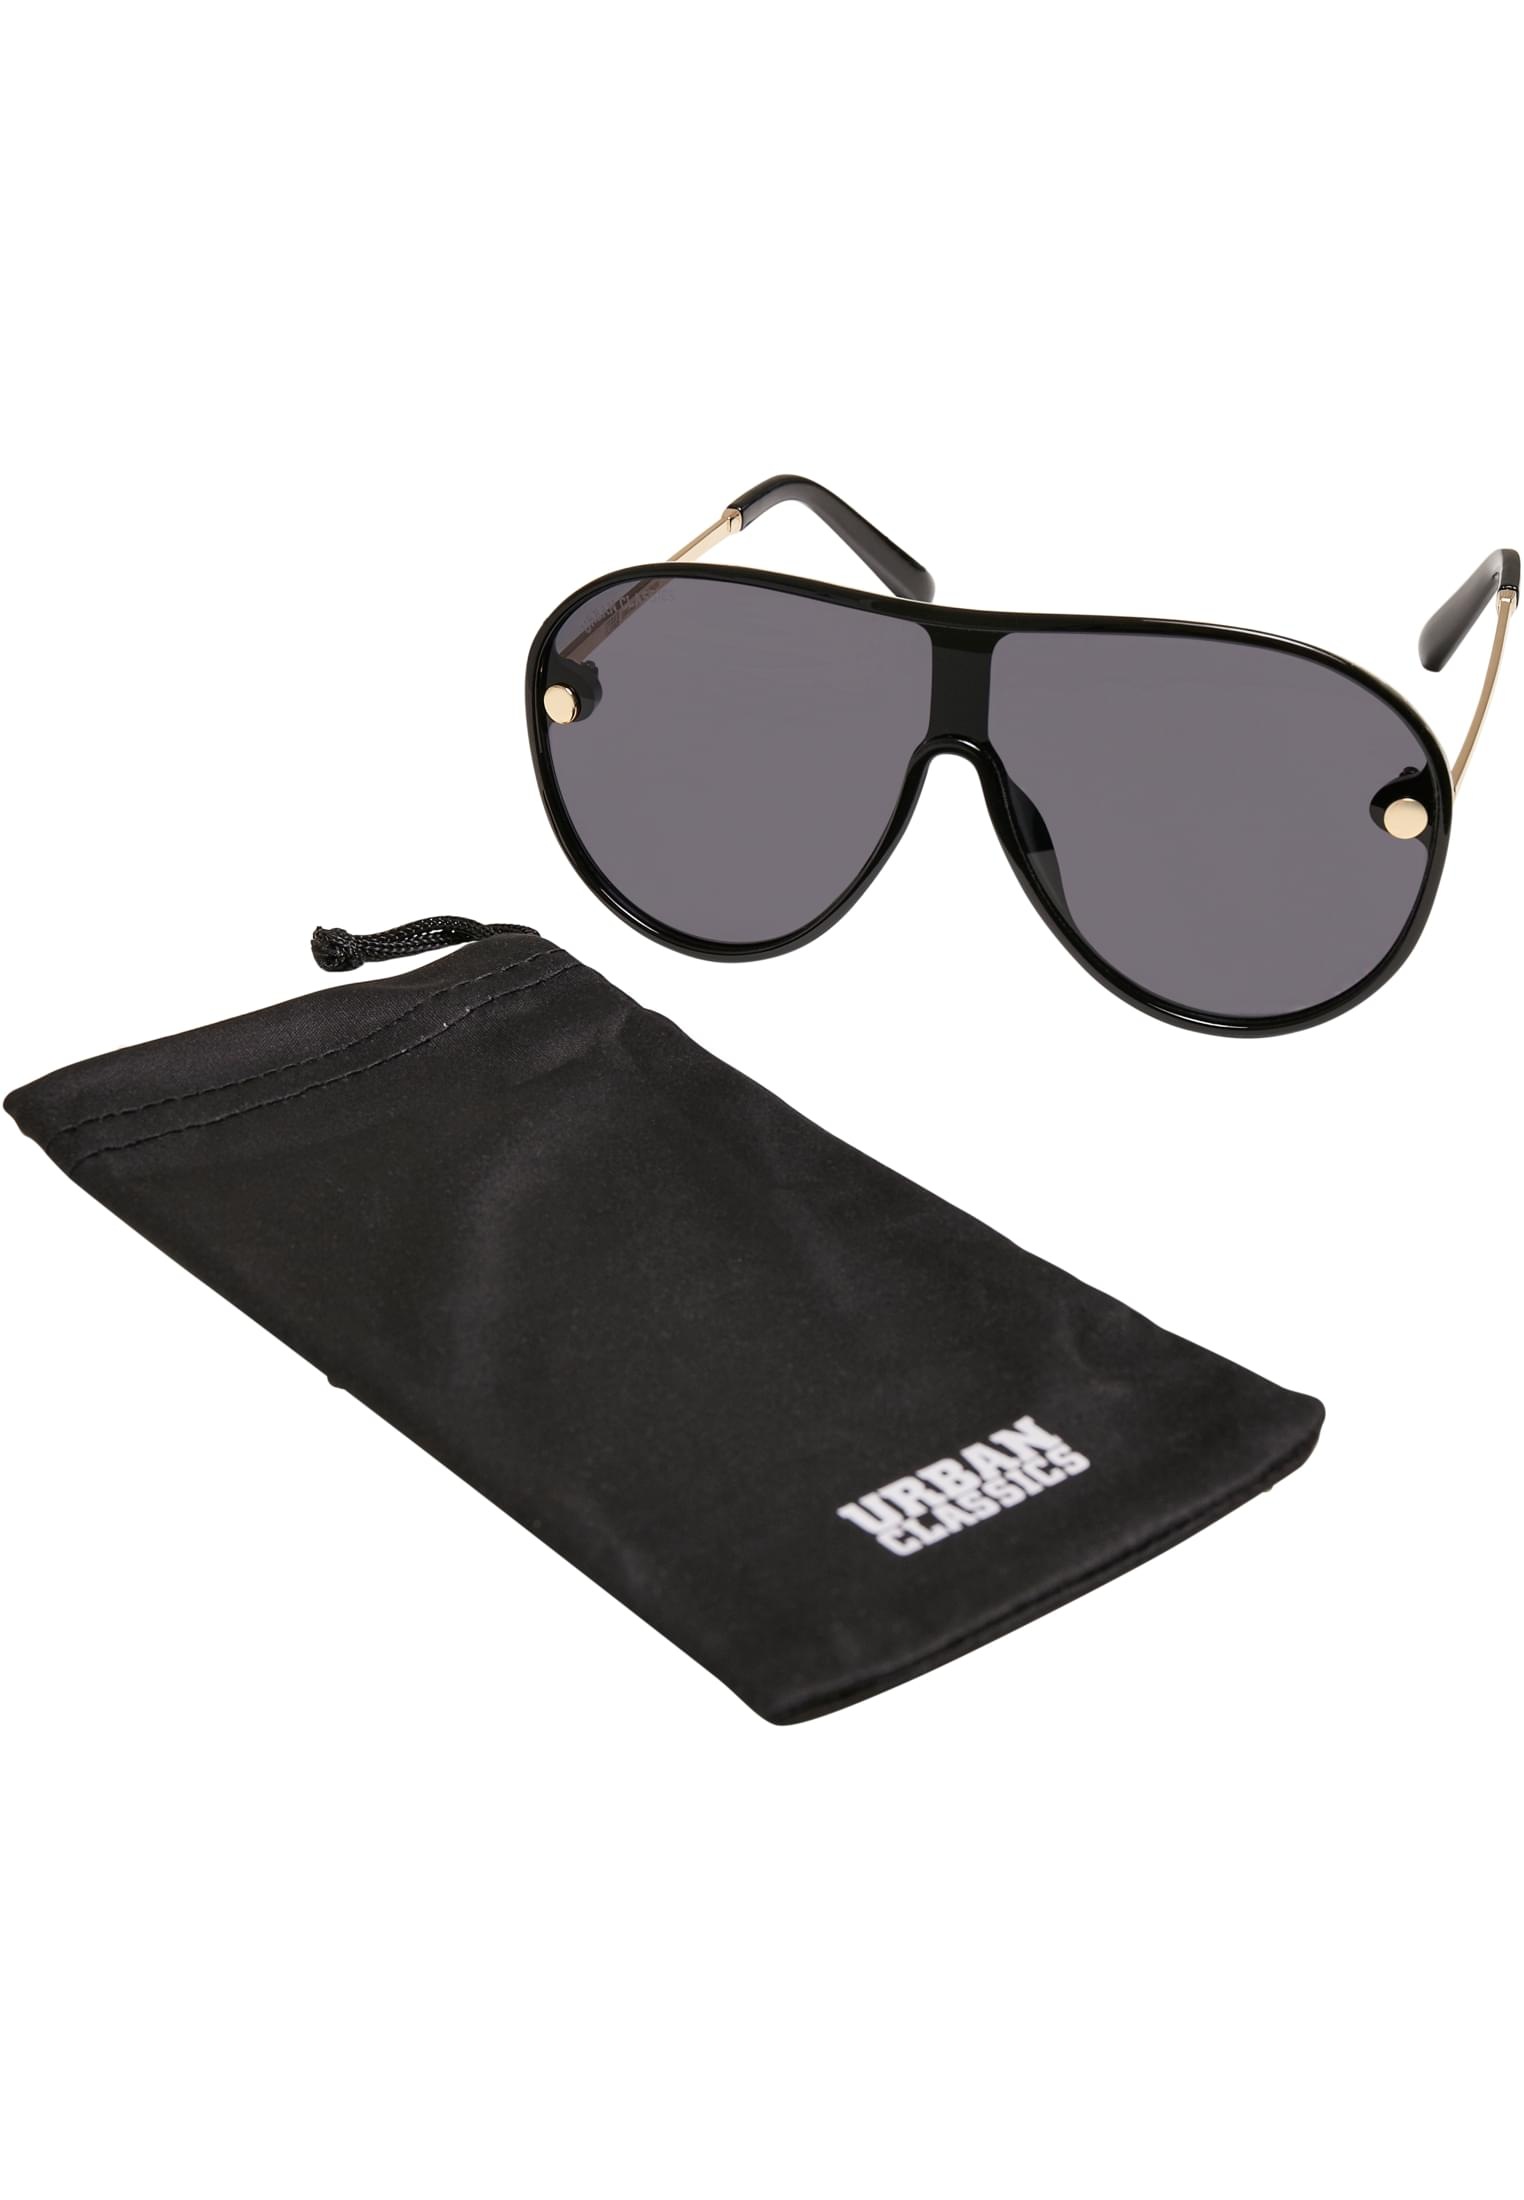 Sunglasses kaufen »Unisex Naxos« URBAN Sonnenbrille I\'m walking CLASSICS online |